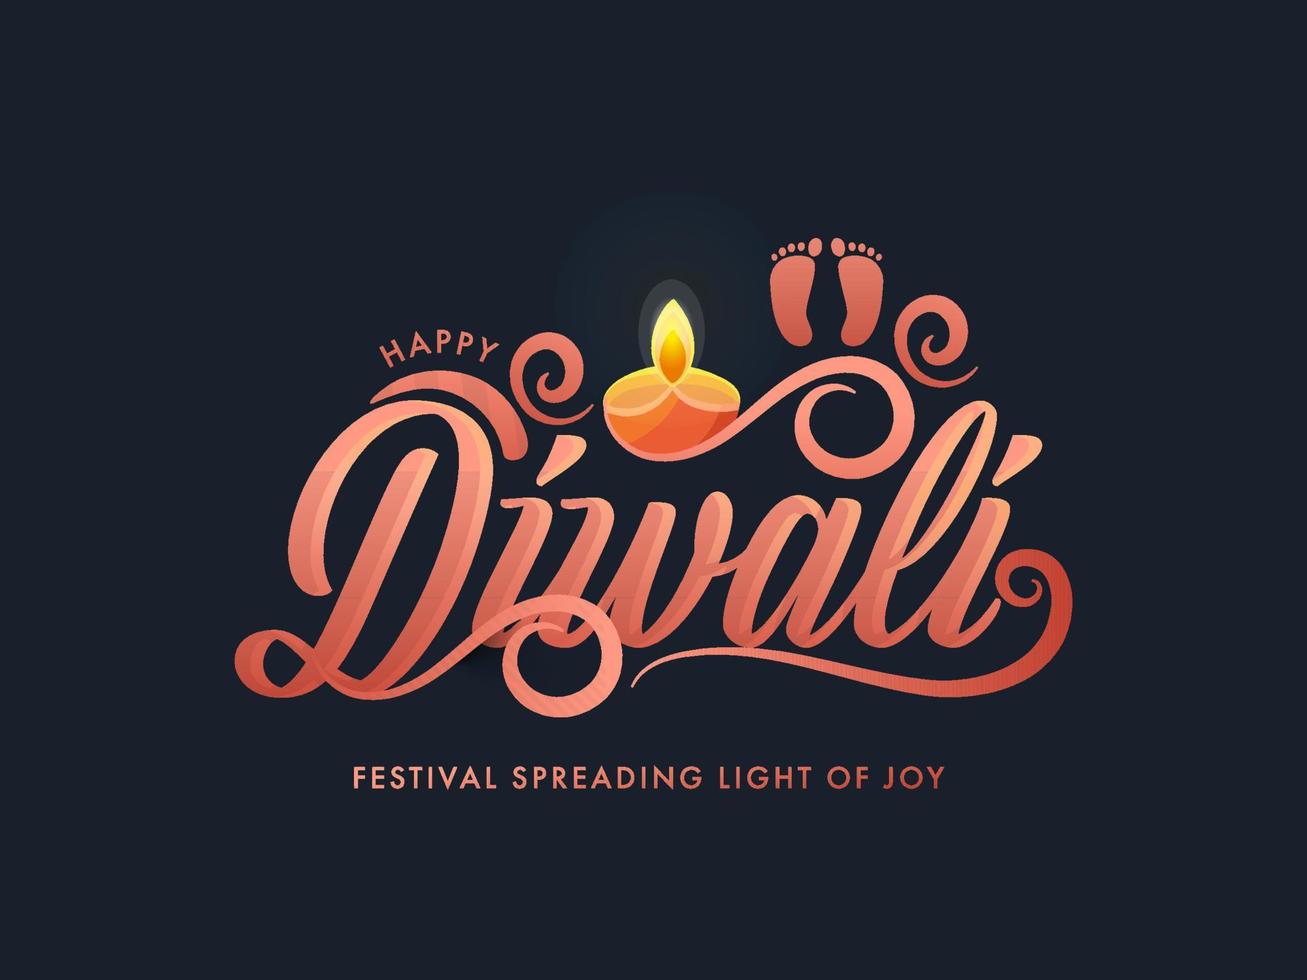 gelukkig diwali festival verspreiden licht van vreugde tekst met godin voetafdruk en lit olie lamp Aan donker taling blauw achtergrond. vector